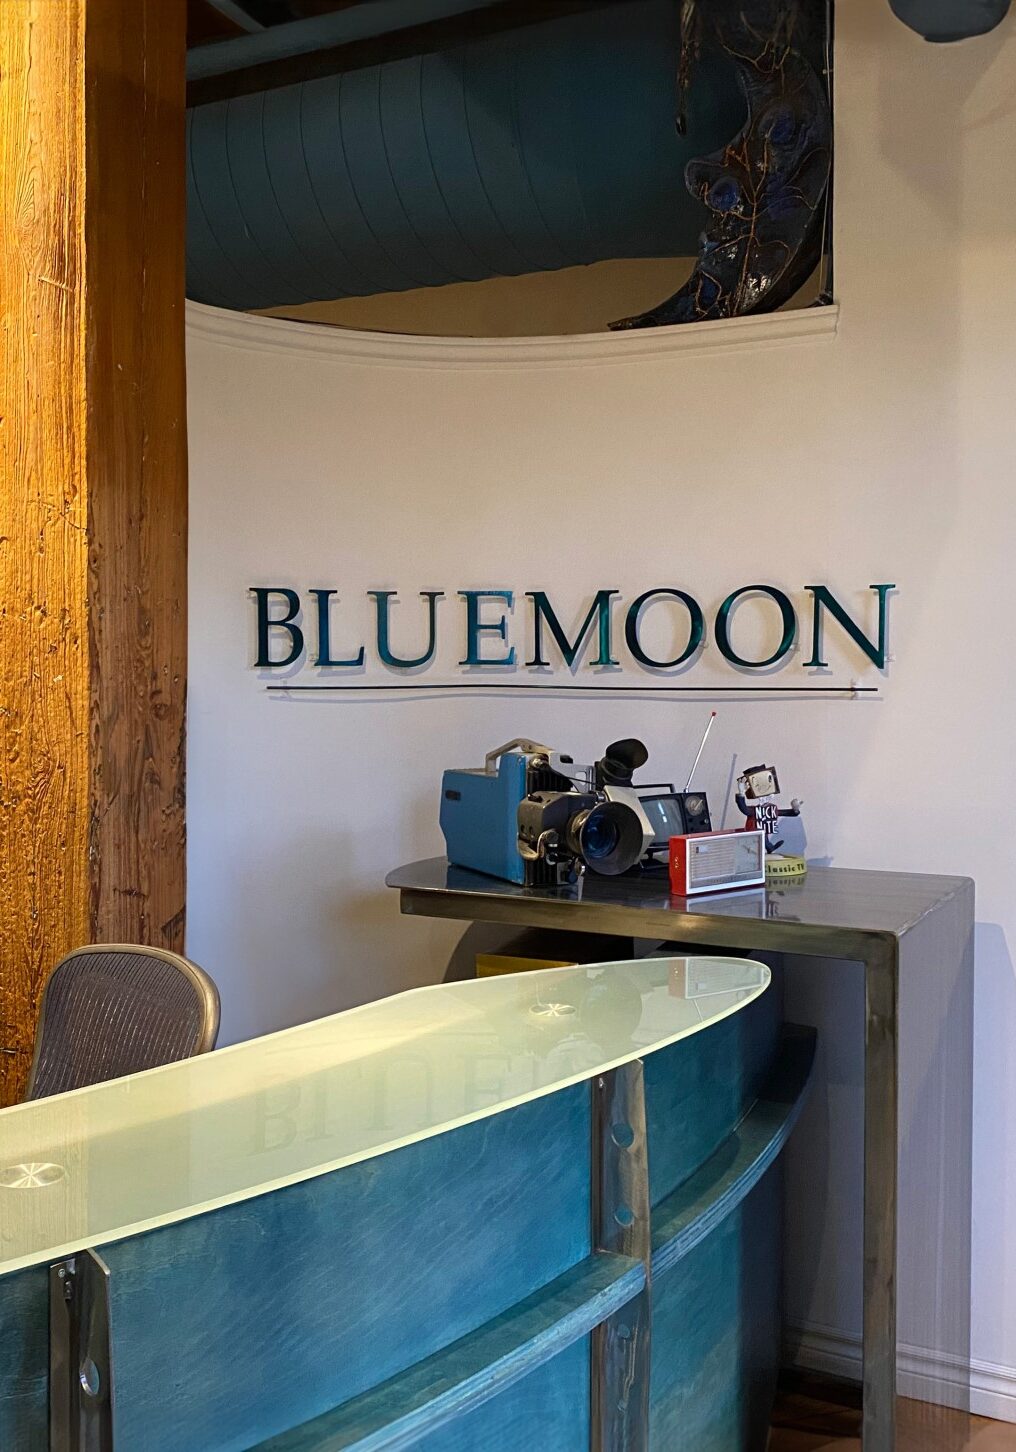 BlueMoon office logo